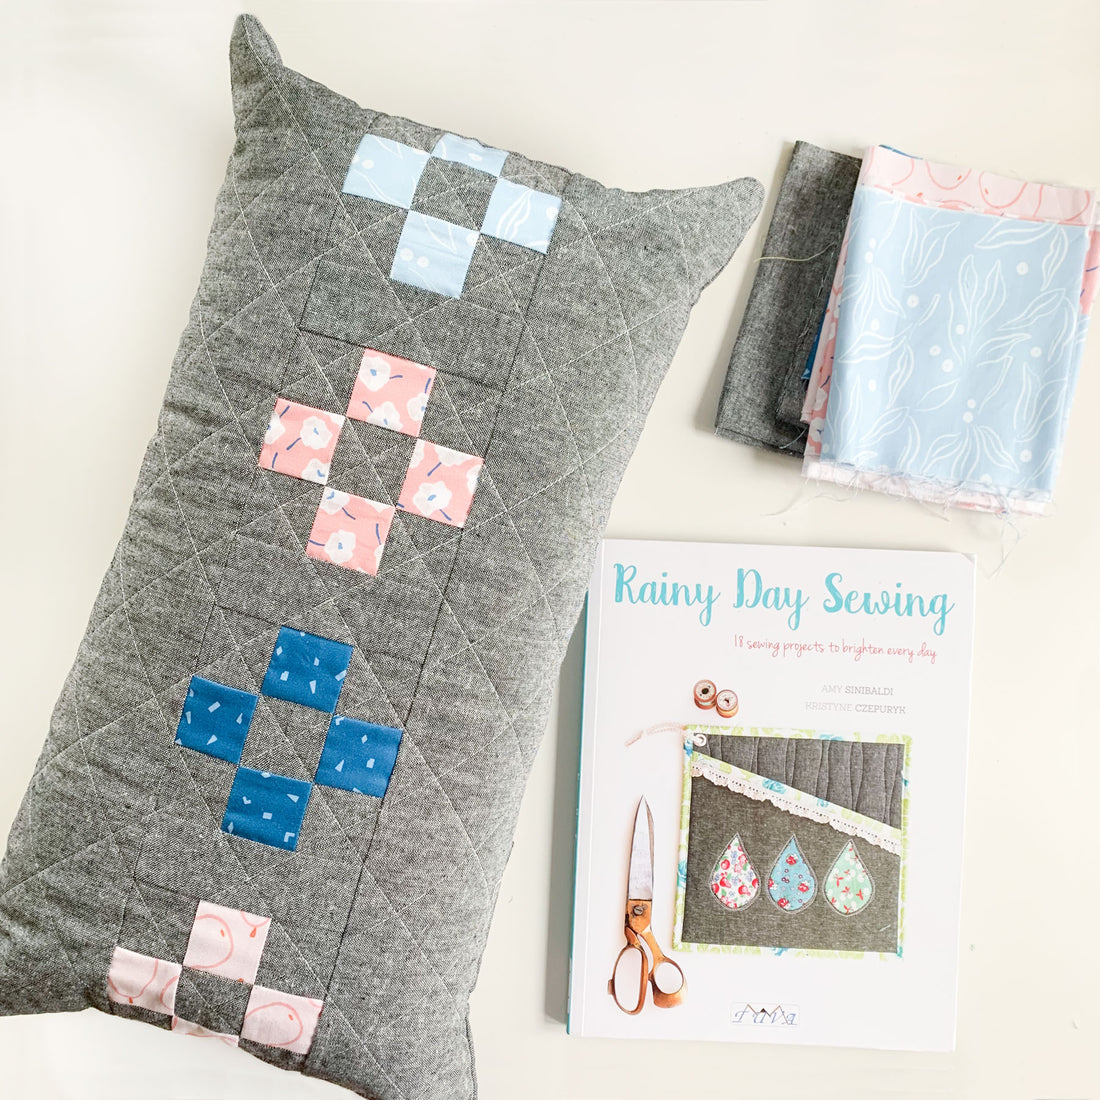 Rainy Day Sewing Book Tour - Spotlight Cushion